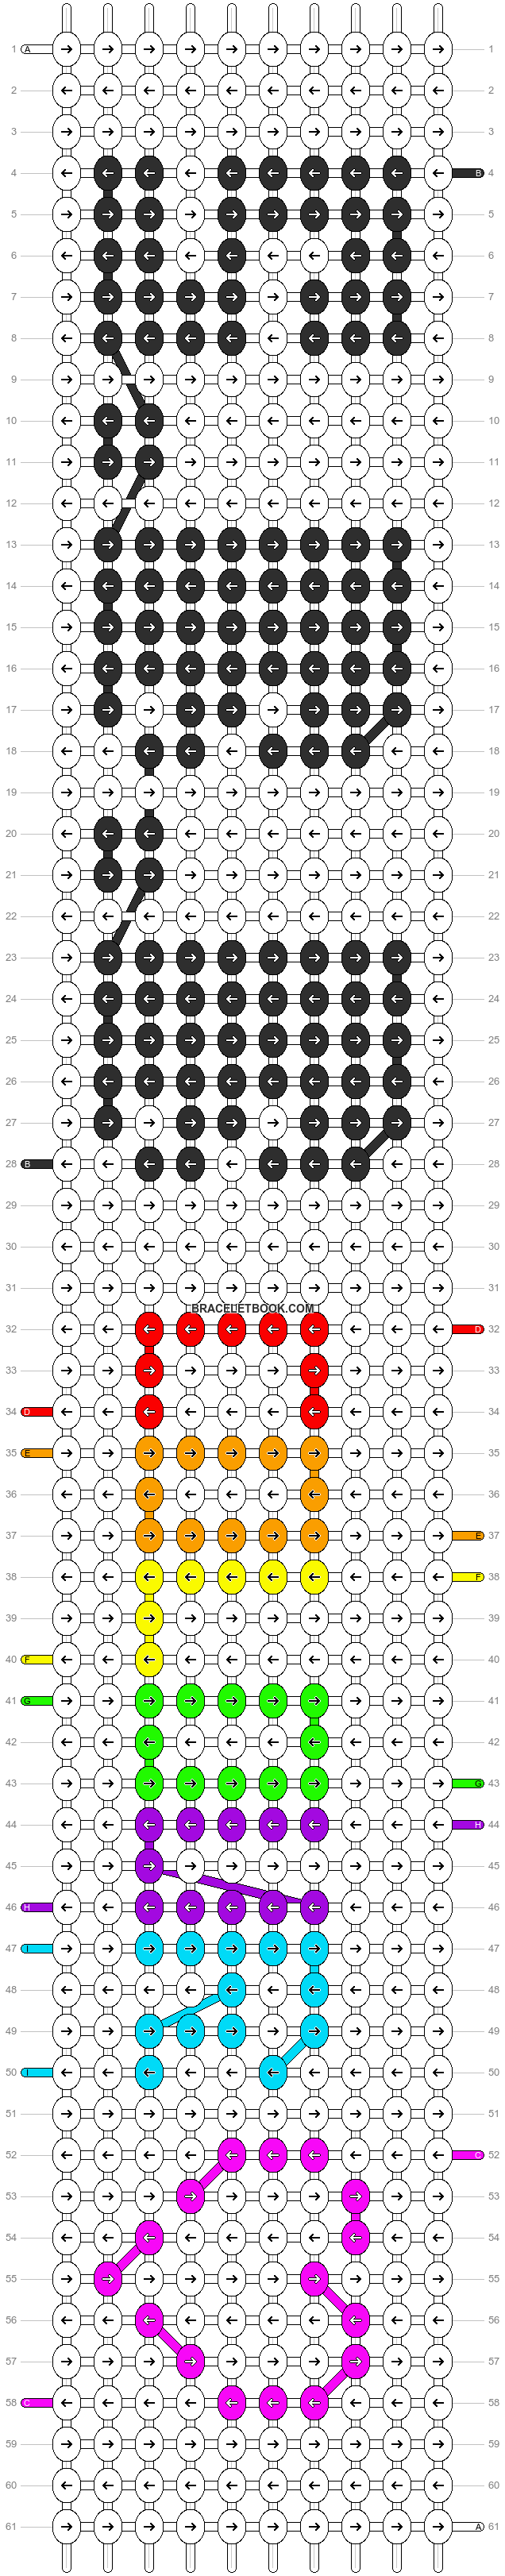 Alpha pattern #1865 pattern